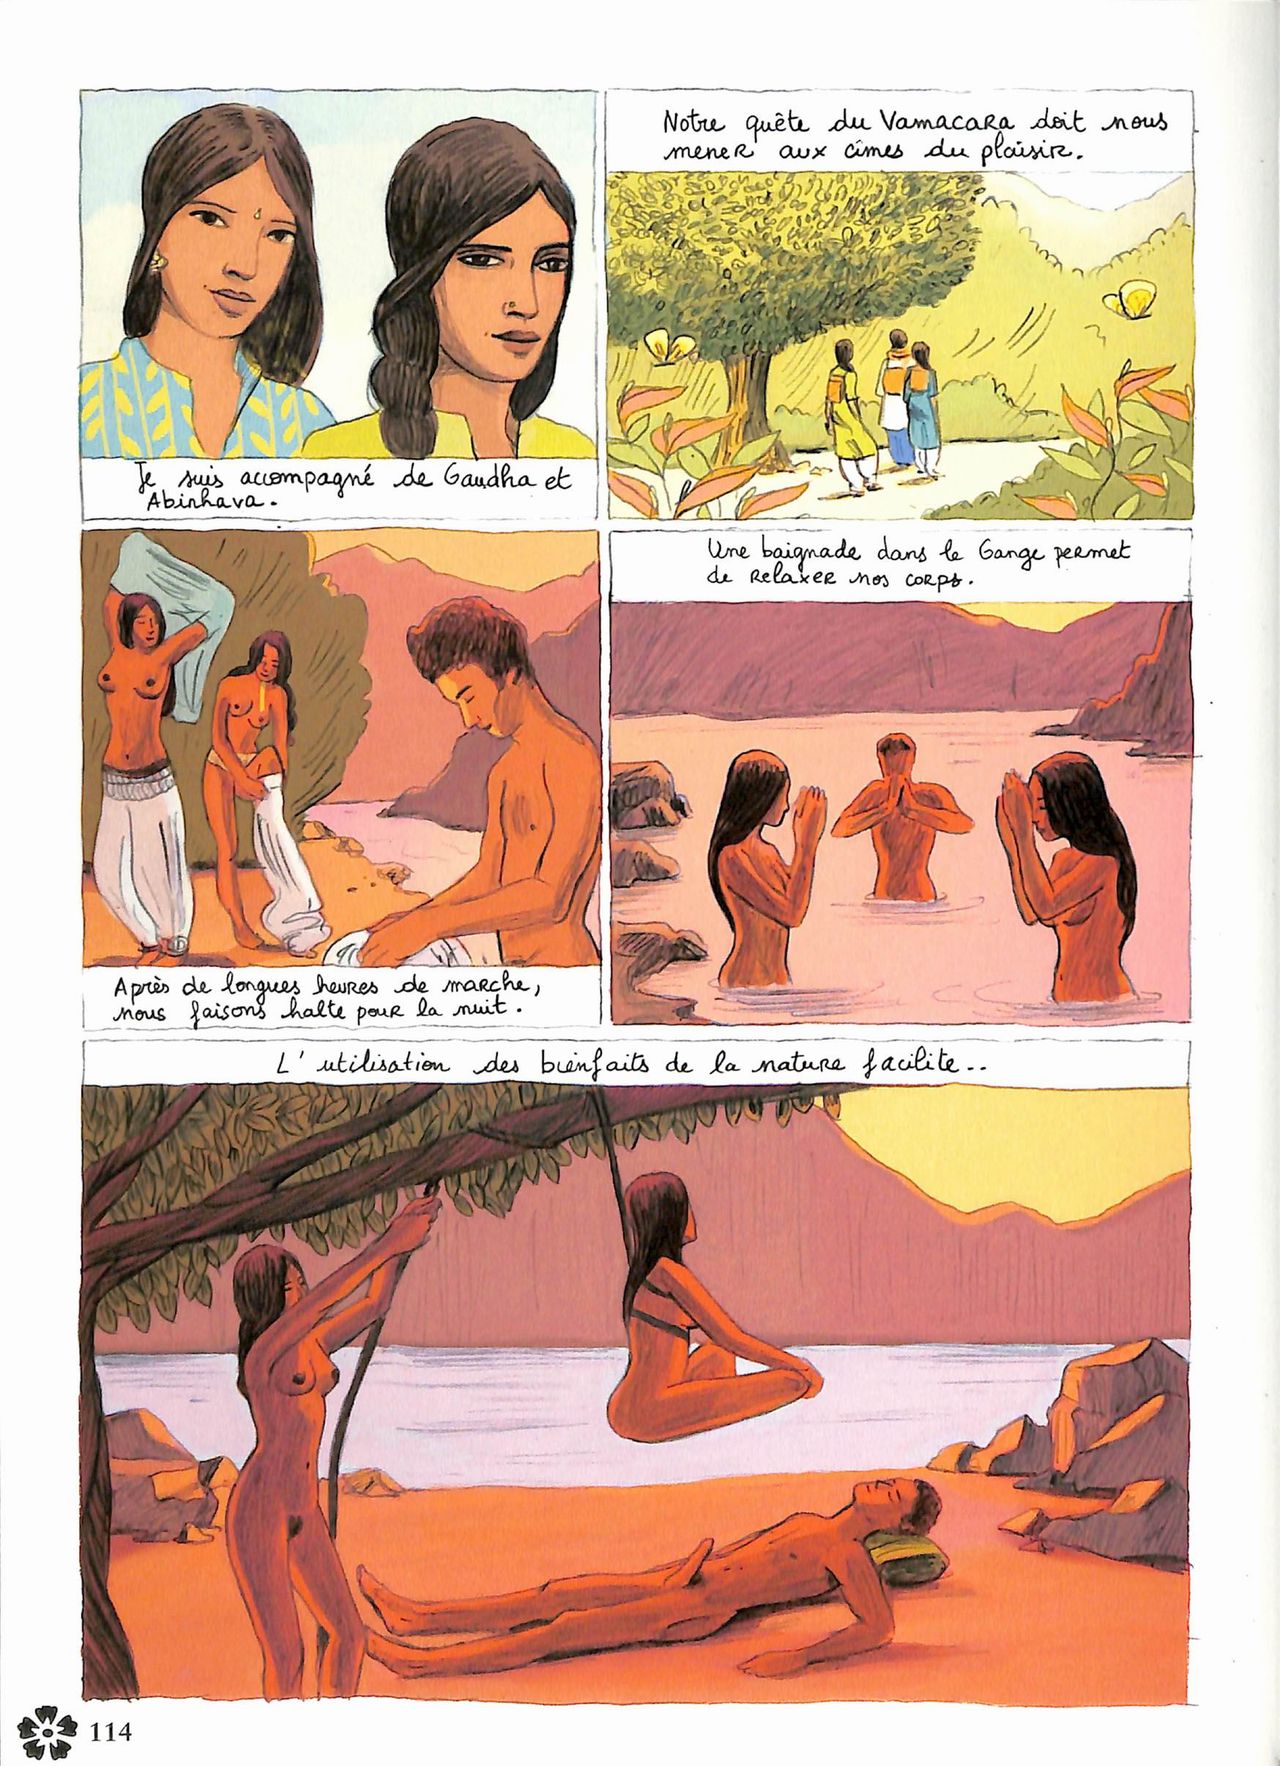 Kama Sutra en bandes dessinées - Kama Sutra with Comics numero d'image 114